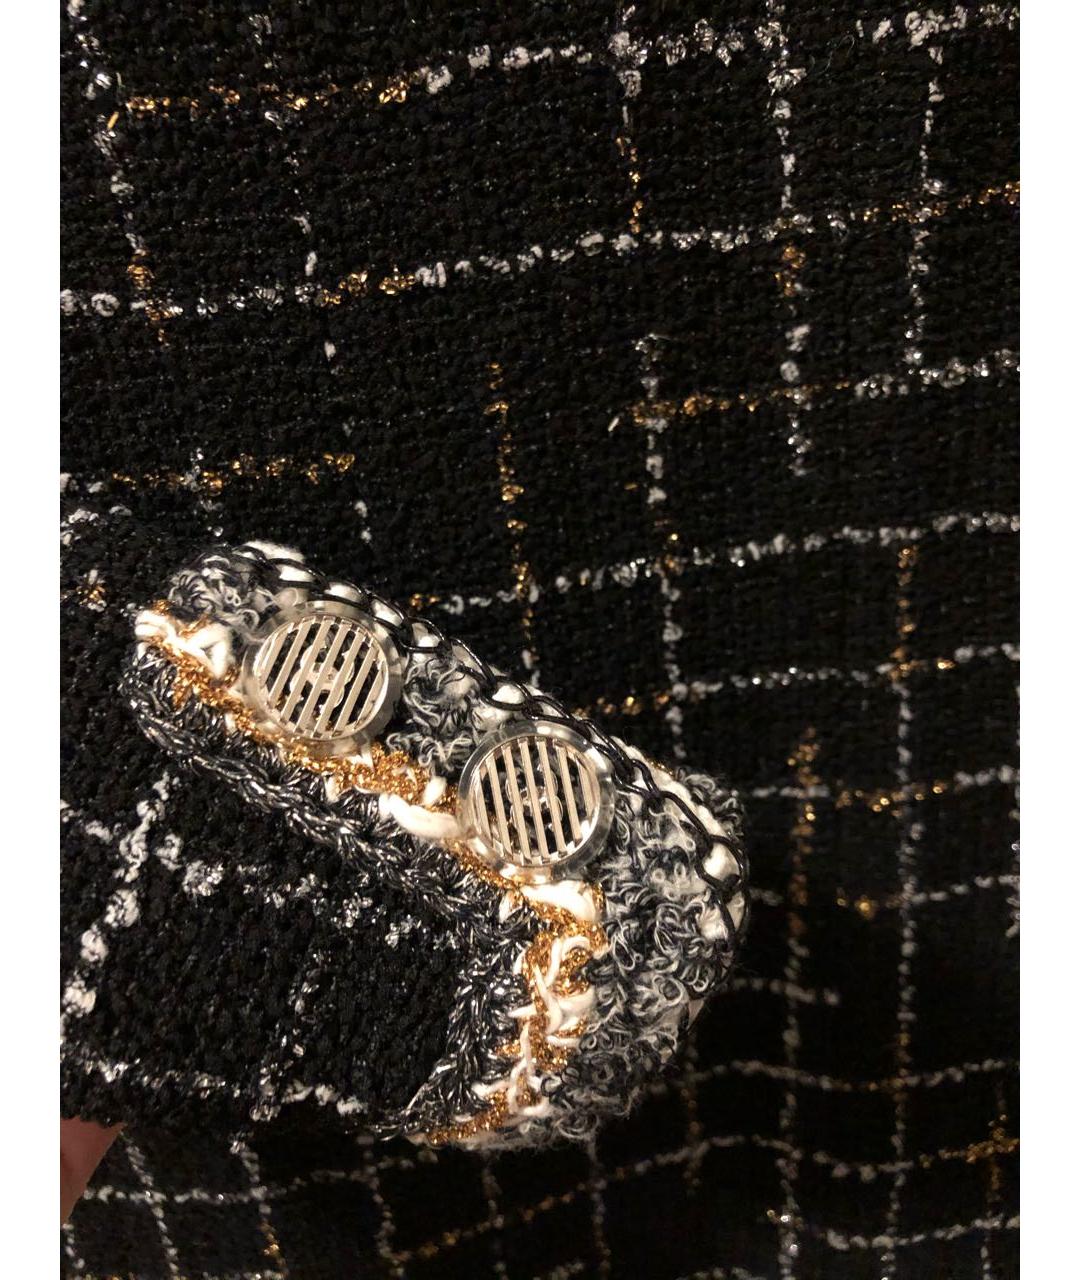 CHANEL PRE-OWNED Черный жакет/пиджак, фото 7